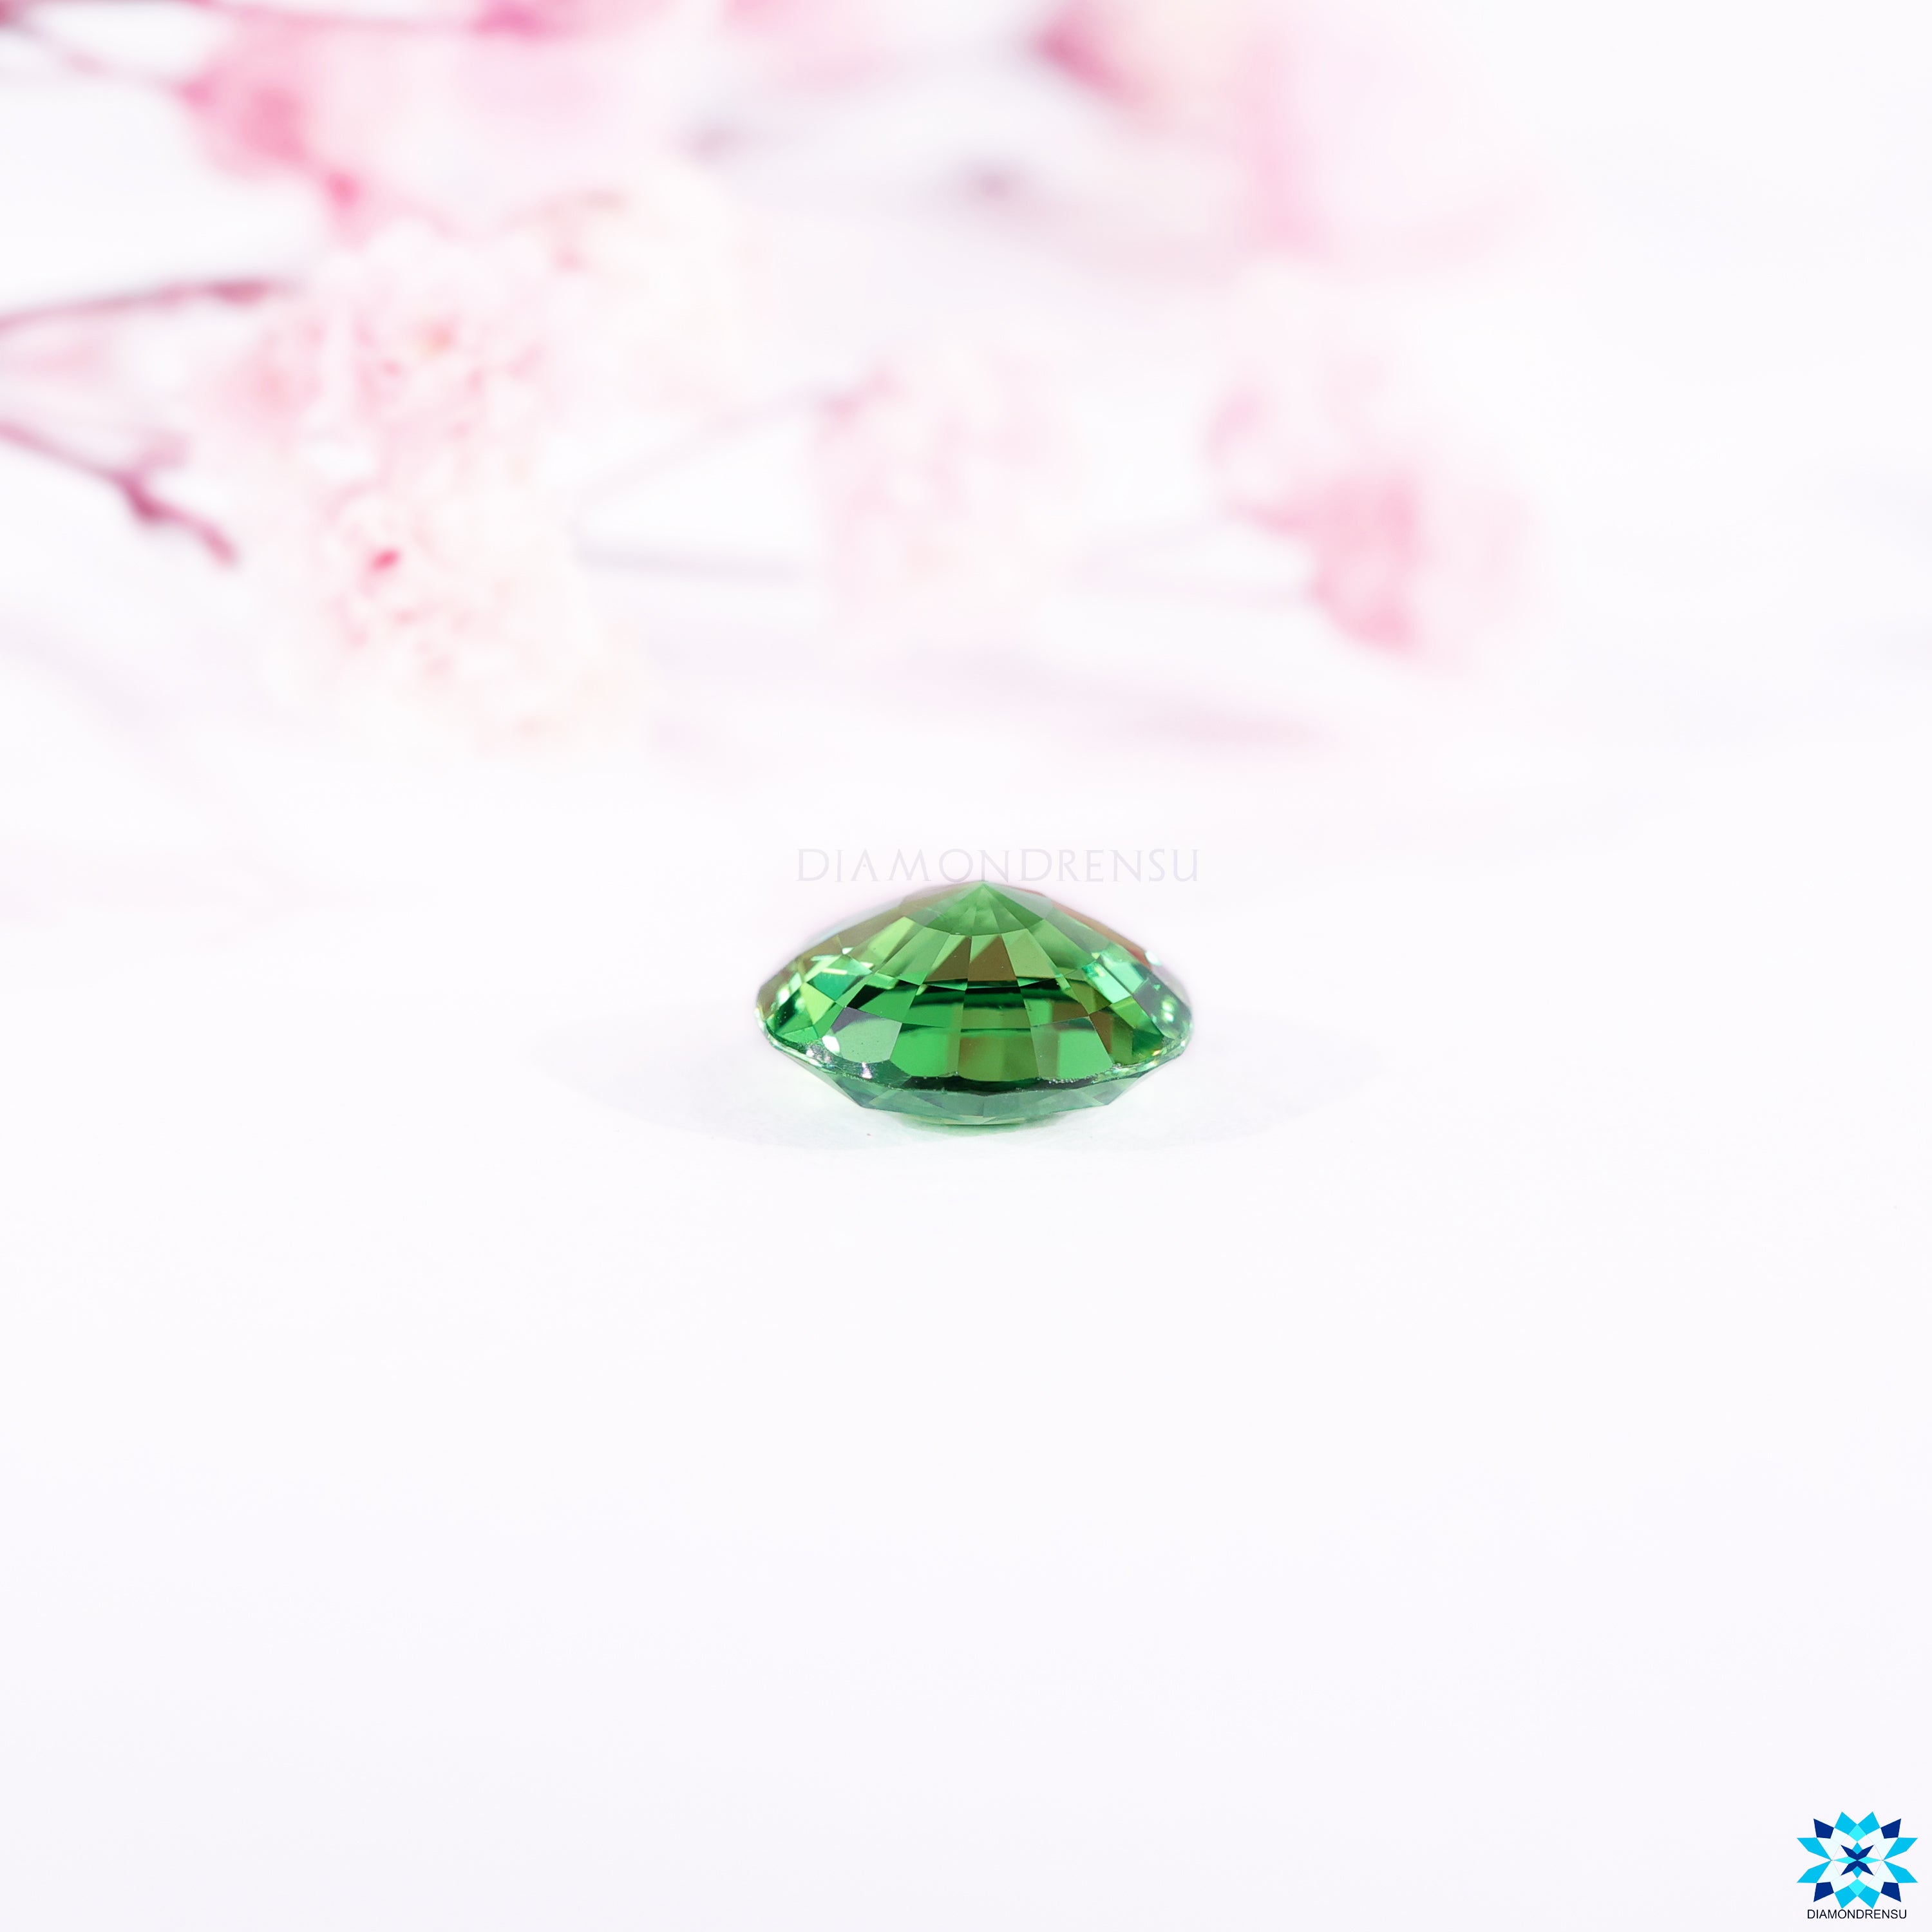 gemstones - diamondrensu